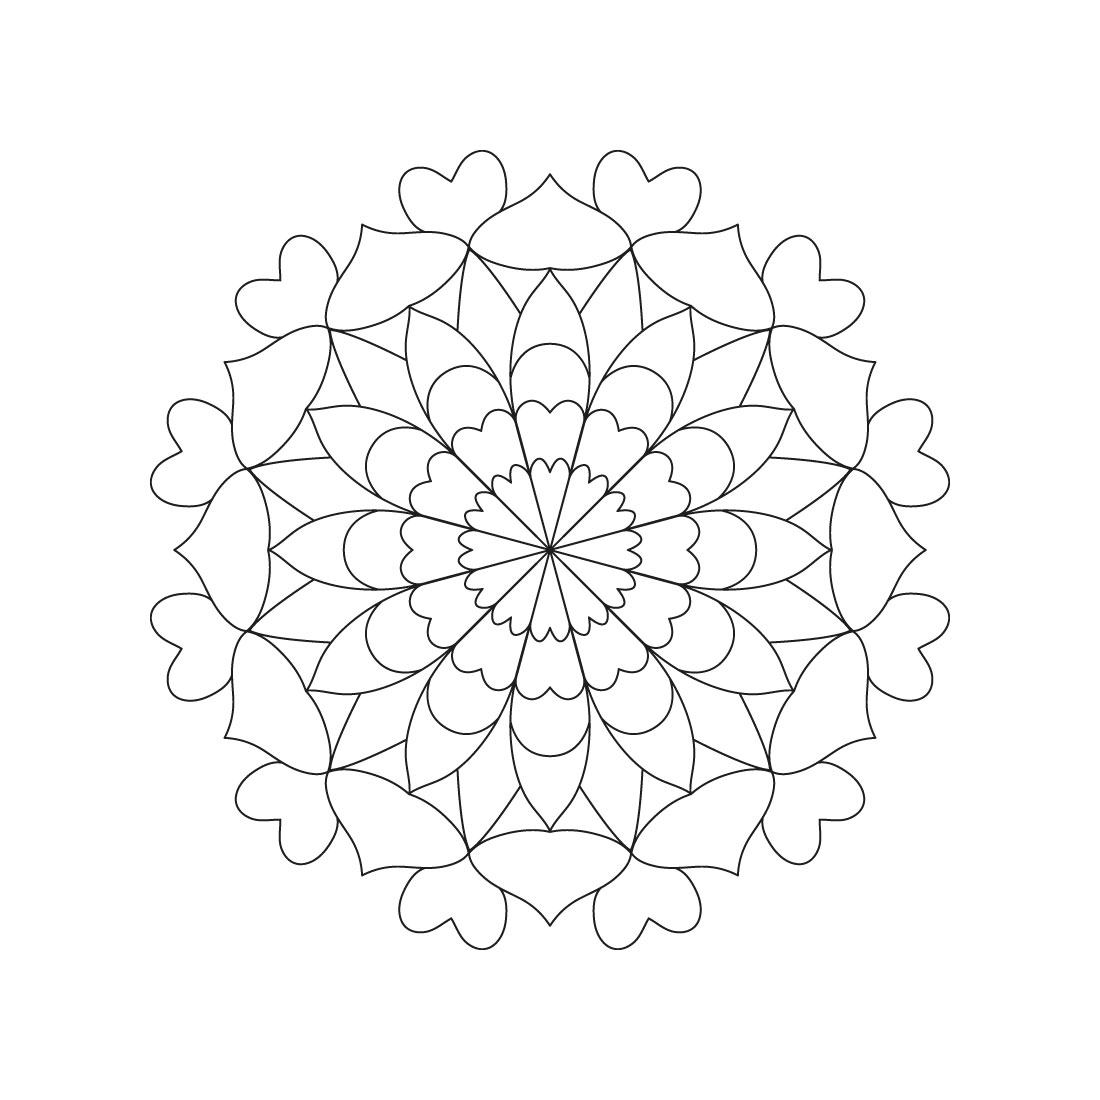 bundle of 10 peaceful patterns mandala coloring book pages 03 231